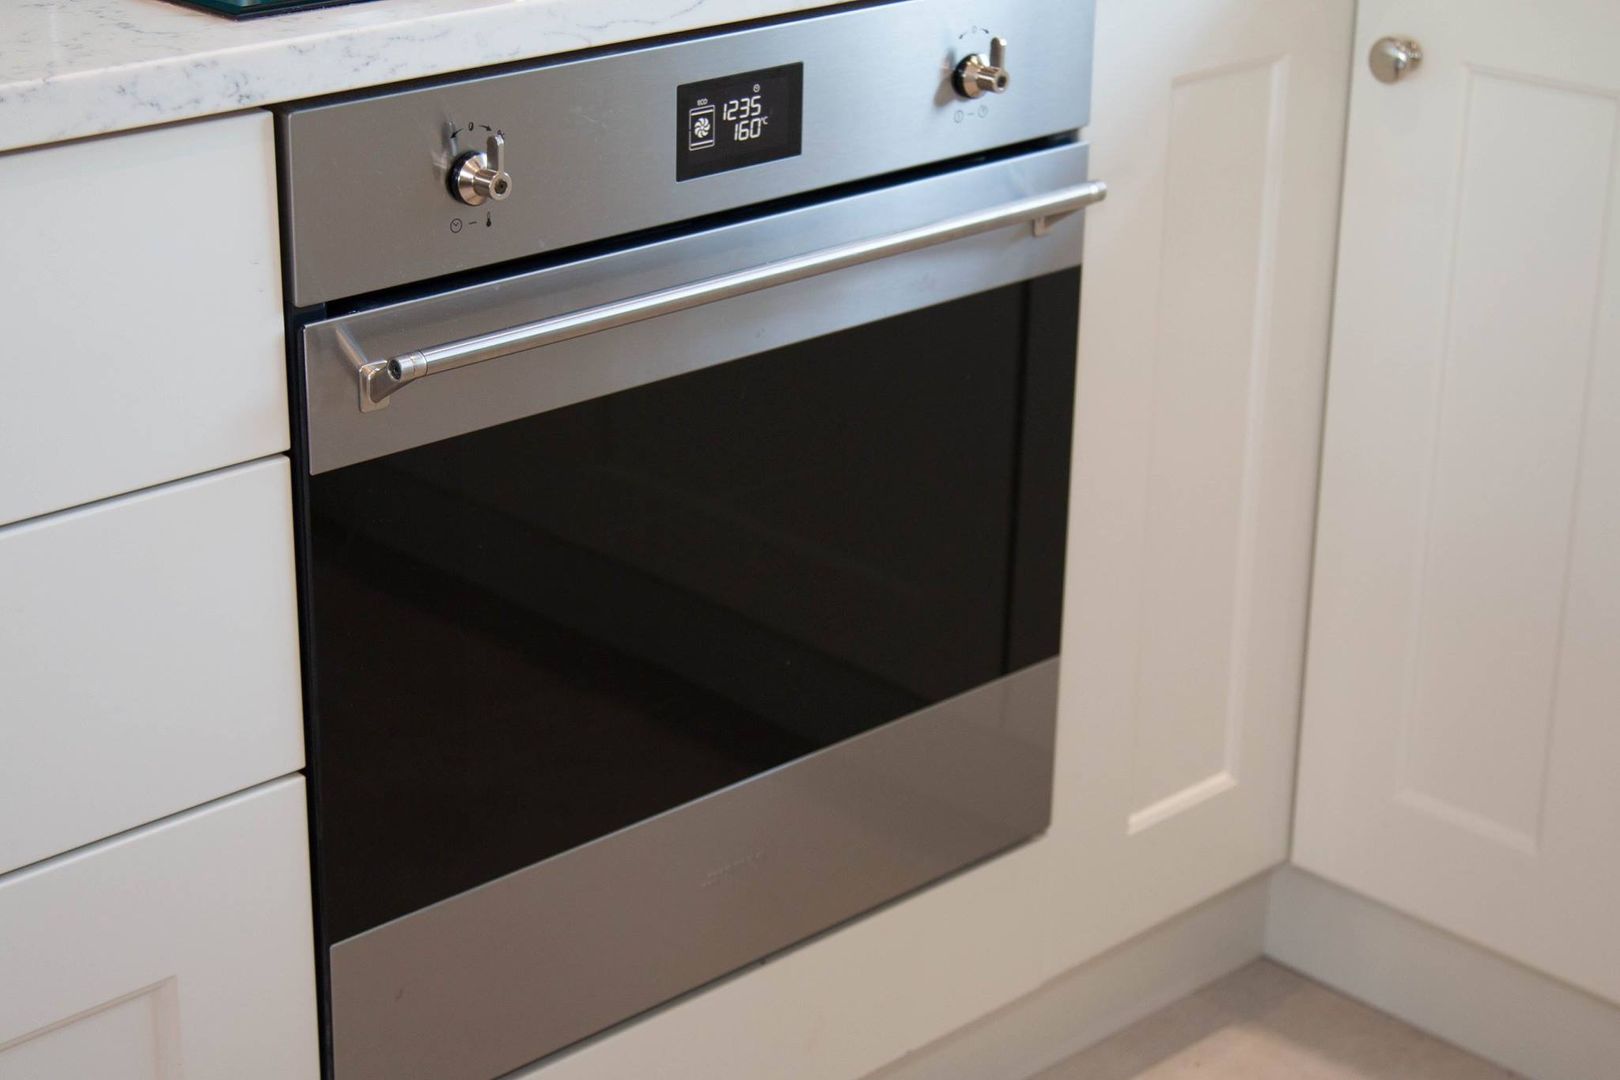 SMEG Classic Appliances homify مطبخ حديد smeg,oven,appliances,kitchen,stainless steel,classic,traditional